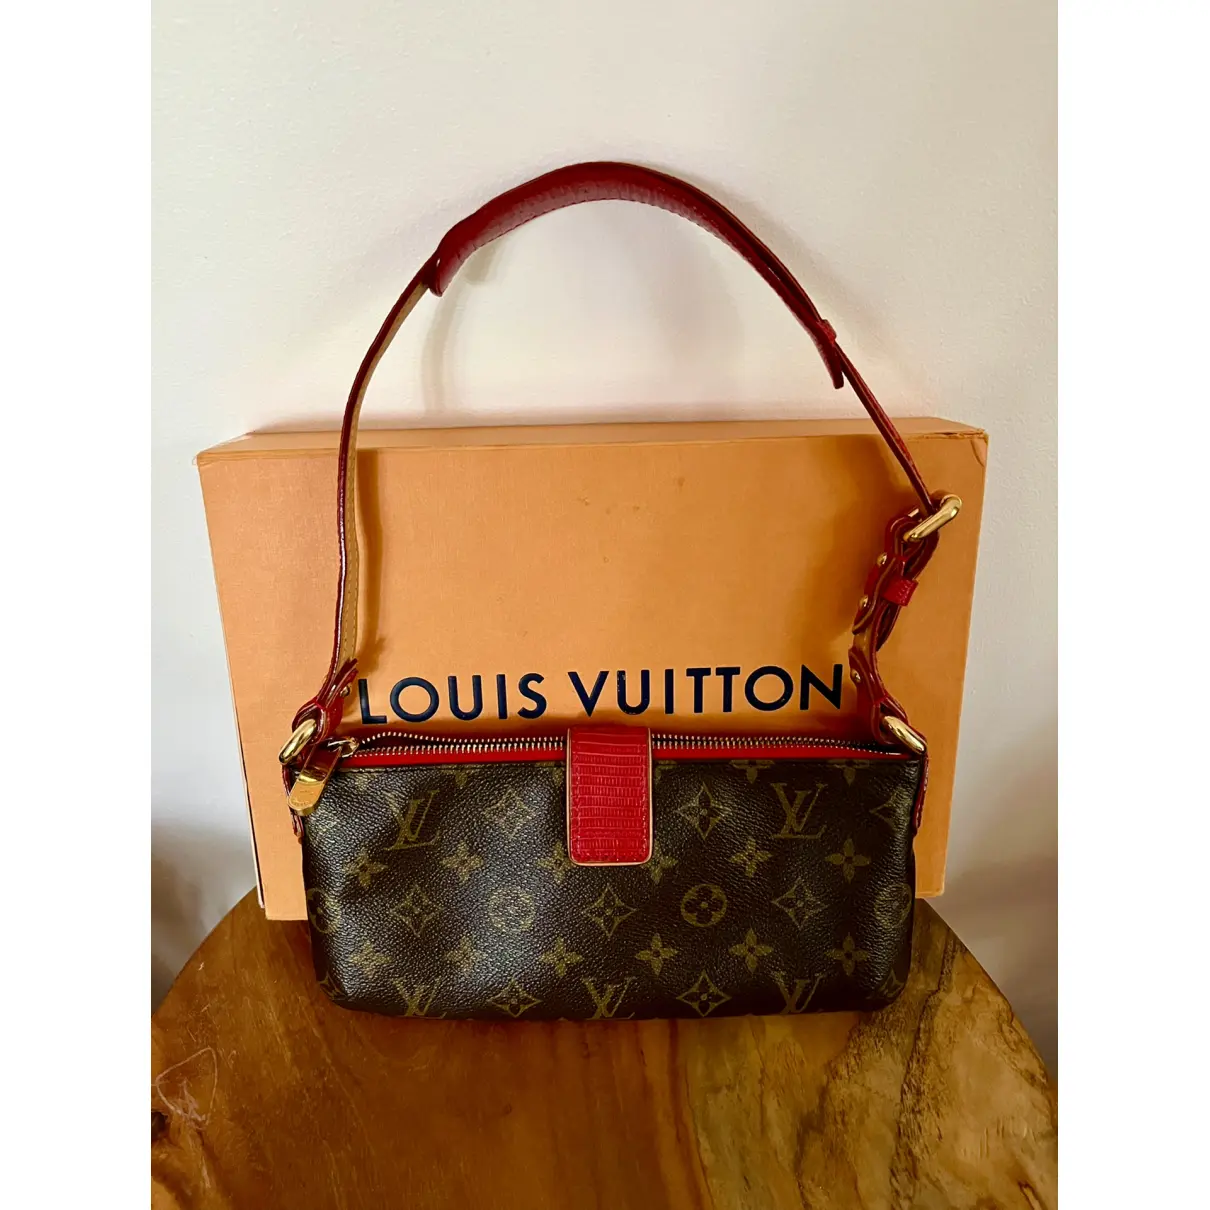 Buy Louis Vuitton Lizard mini bag online